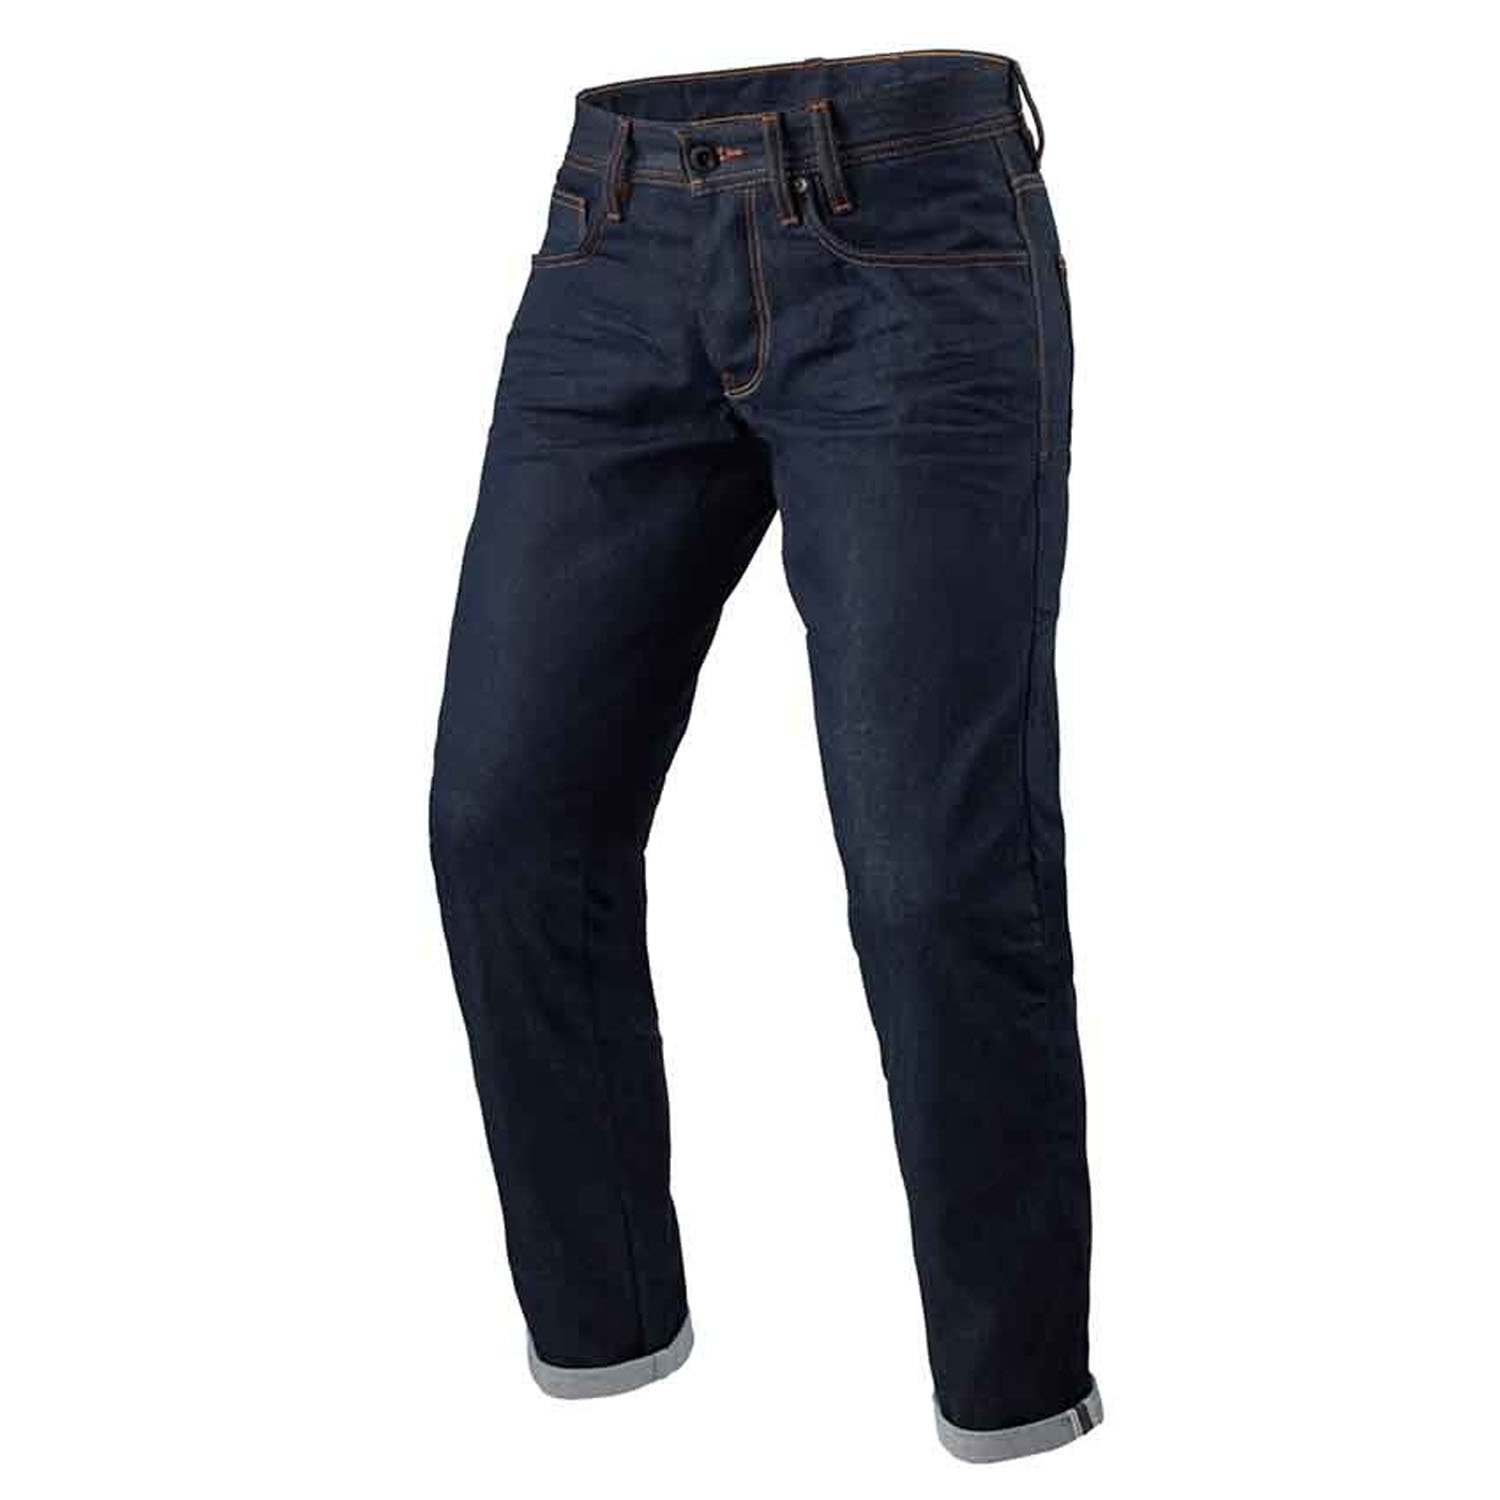 Image of REV'IT! Jeans Lewis Selvedge TF Dark Blue L36 Motorcycle Pants Talla L36/W30